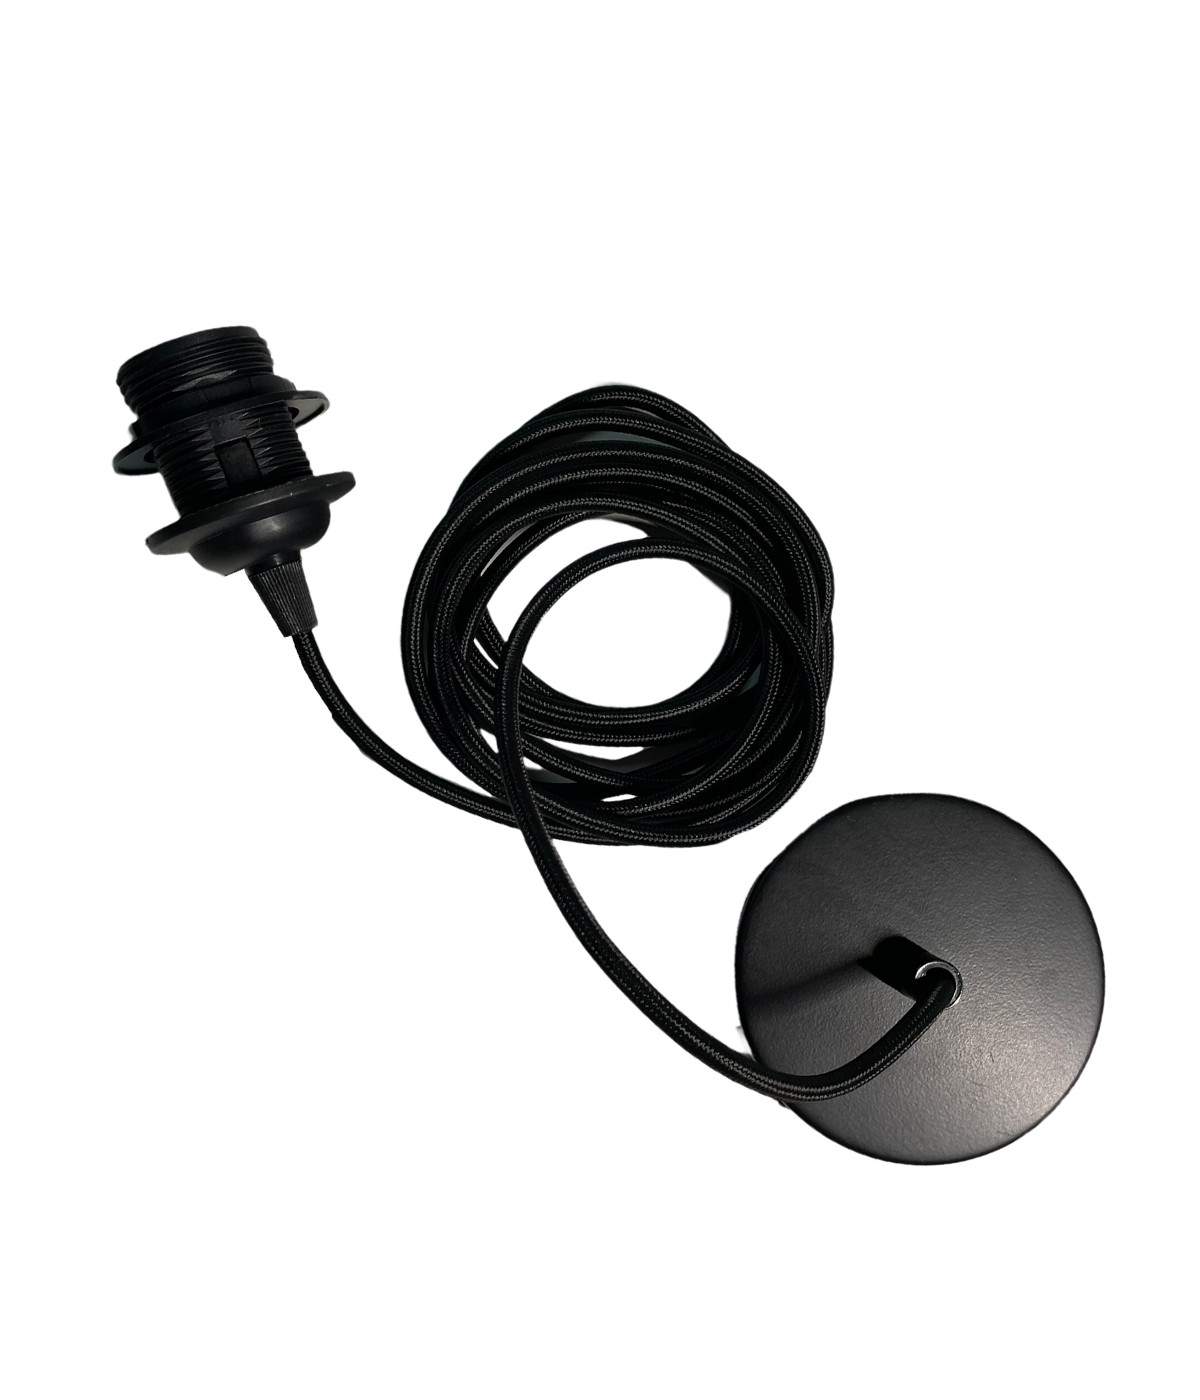 Cable for suspension Black 1,5m